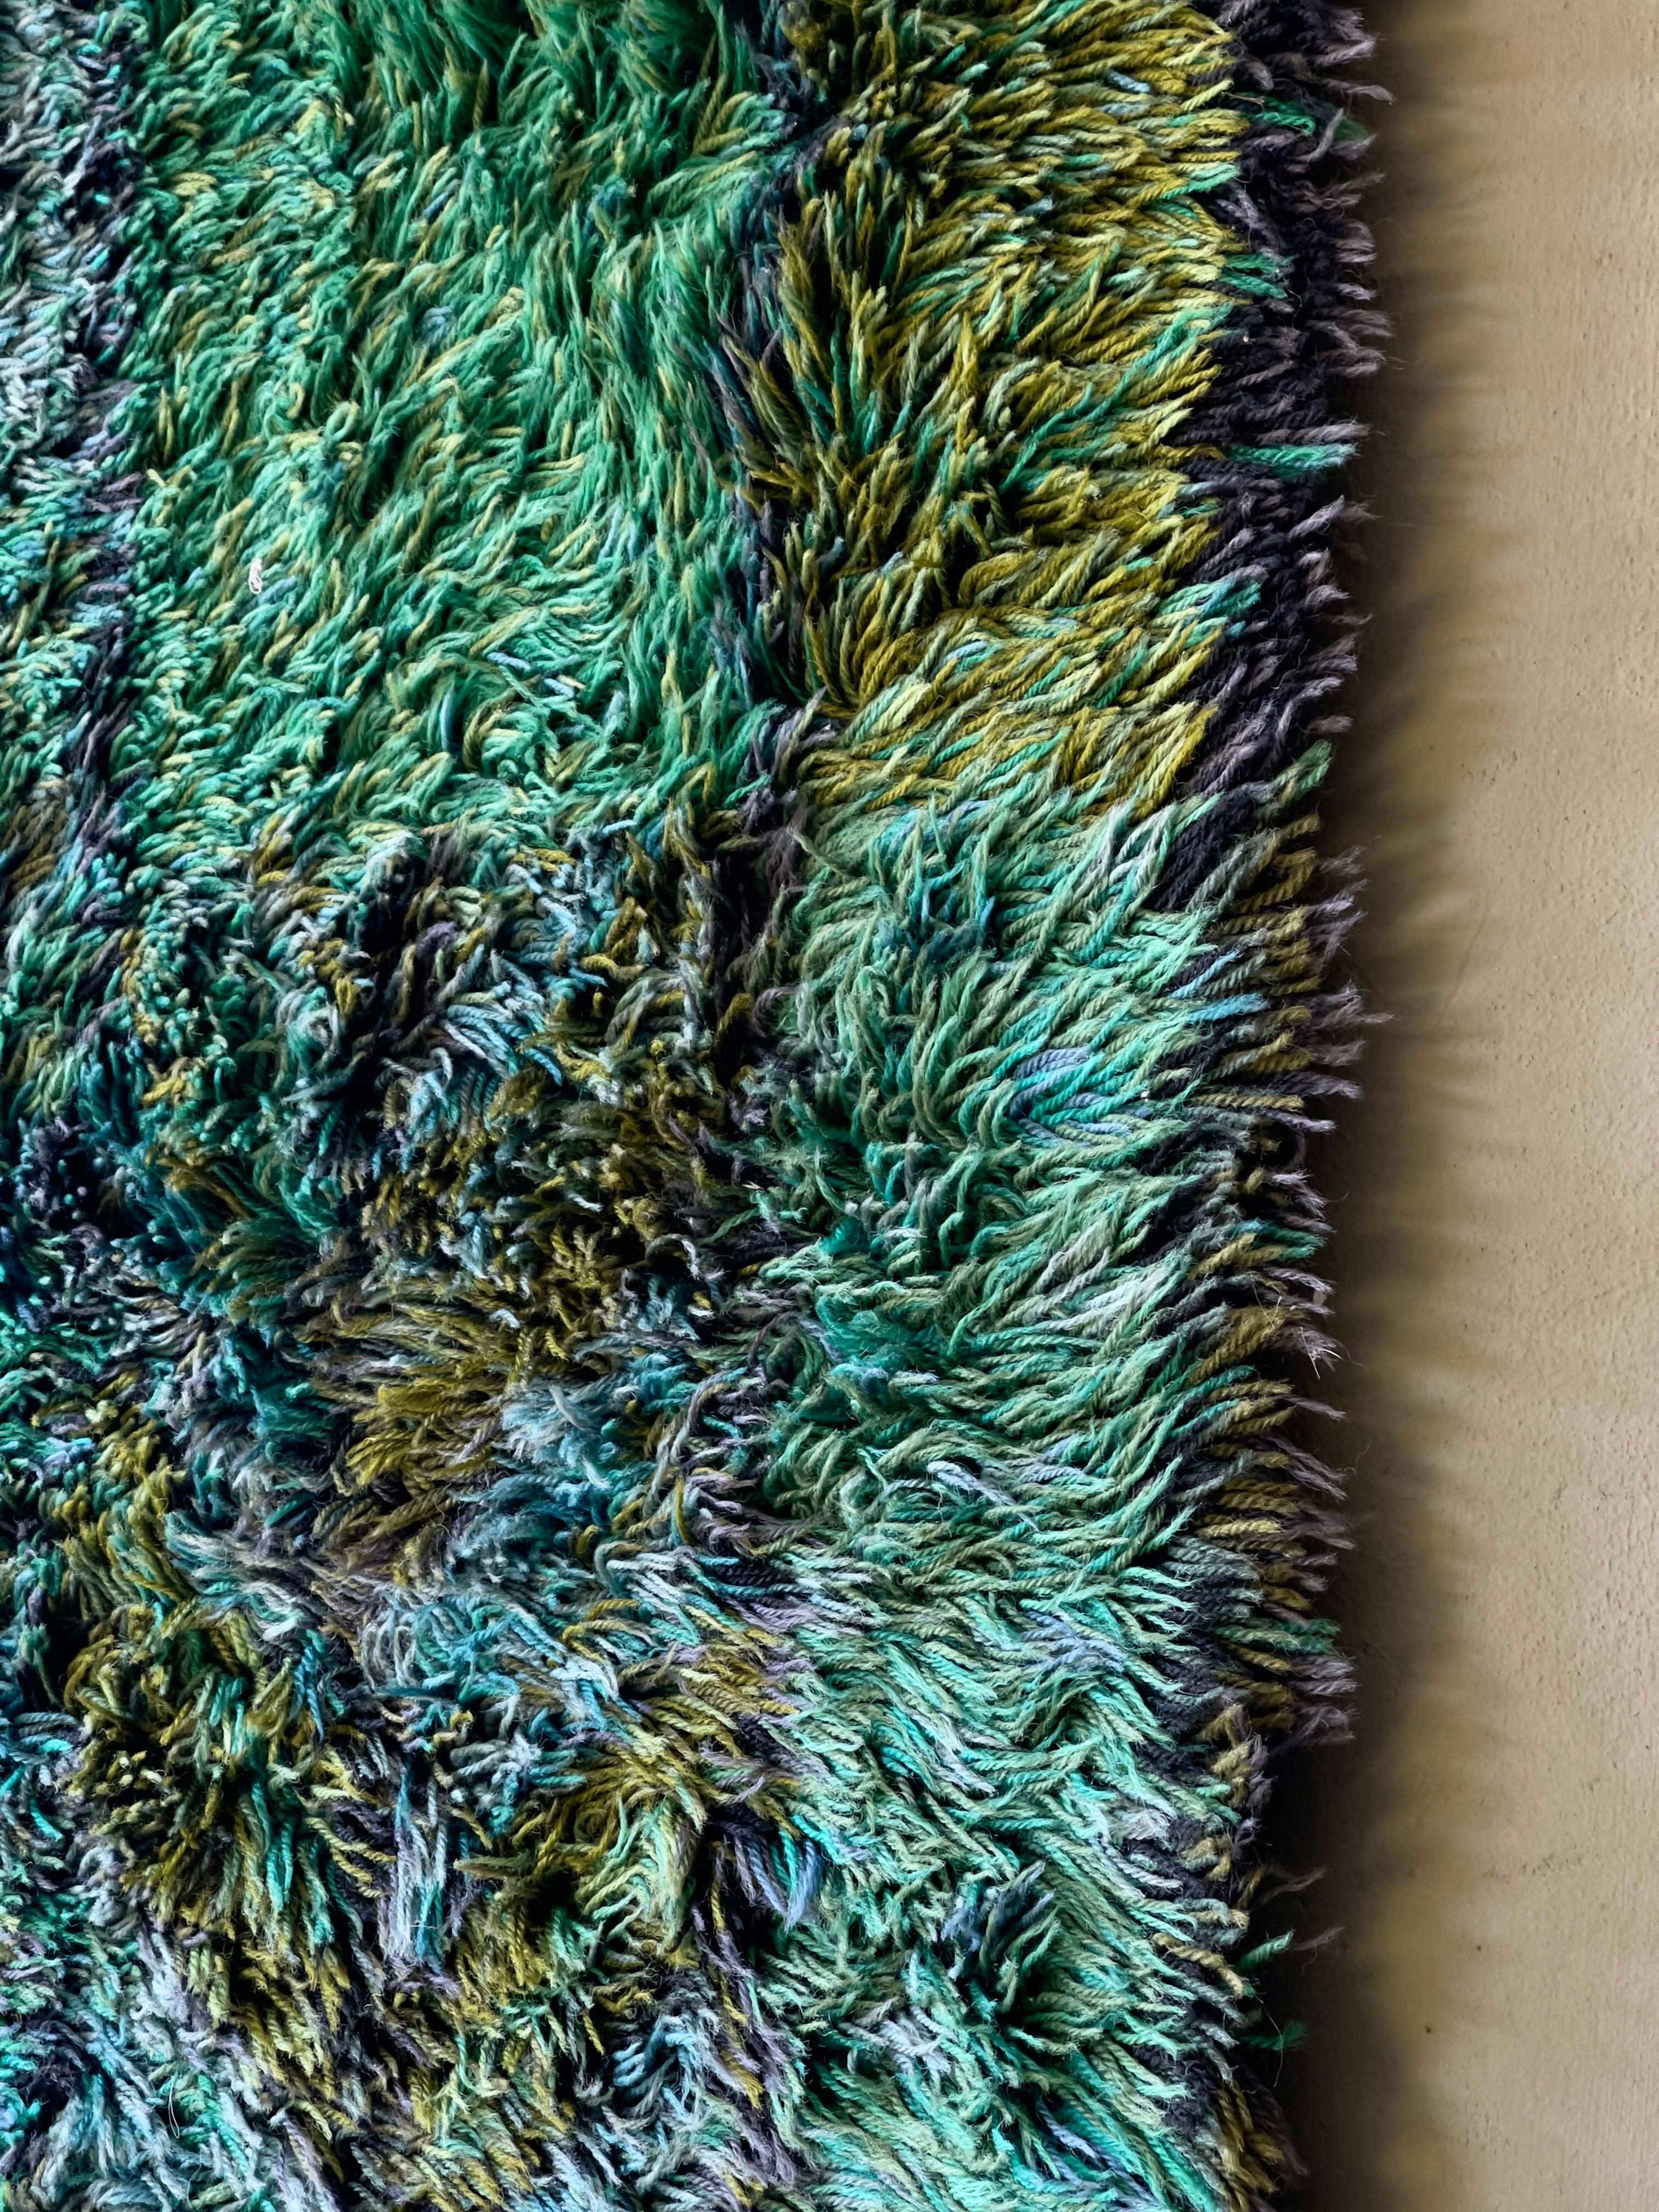 Vintage Swedish green and blue rya rug by Marianne Richter for Ötergyllen rya, 1960s. Handmade by Rya weaving technique from 100% wool.

Swedish textile artist Marianne Richter is internationally revered for her range of extraordinary rugs,